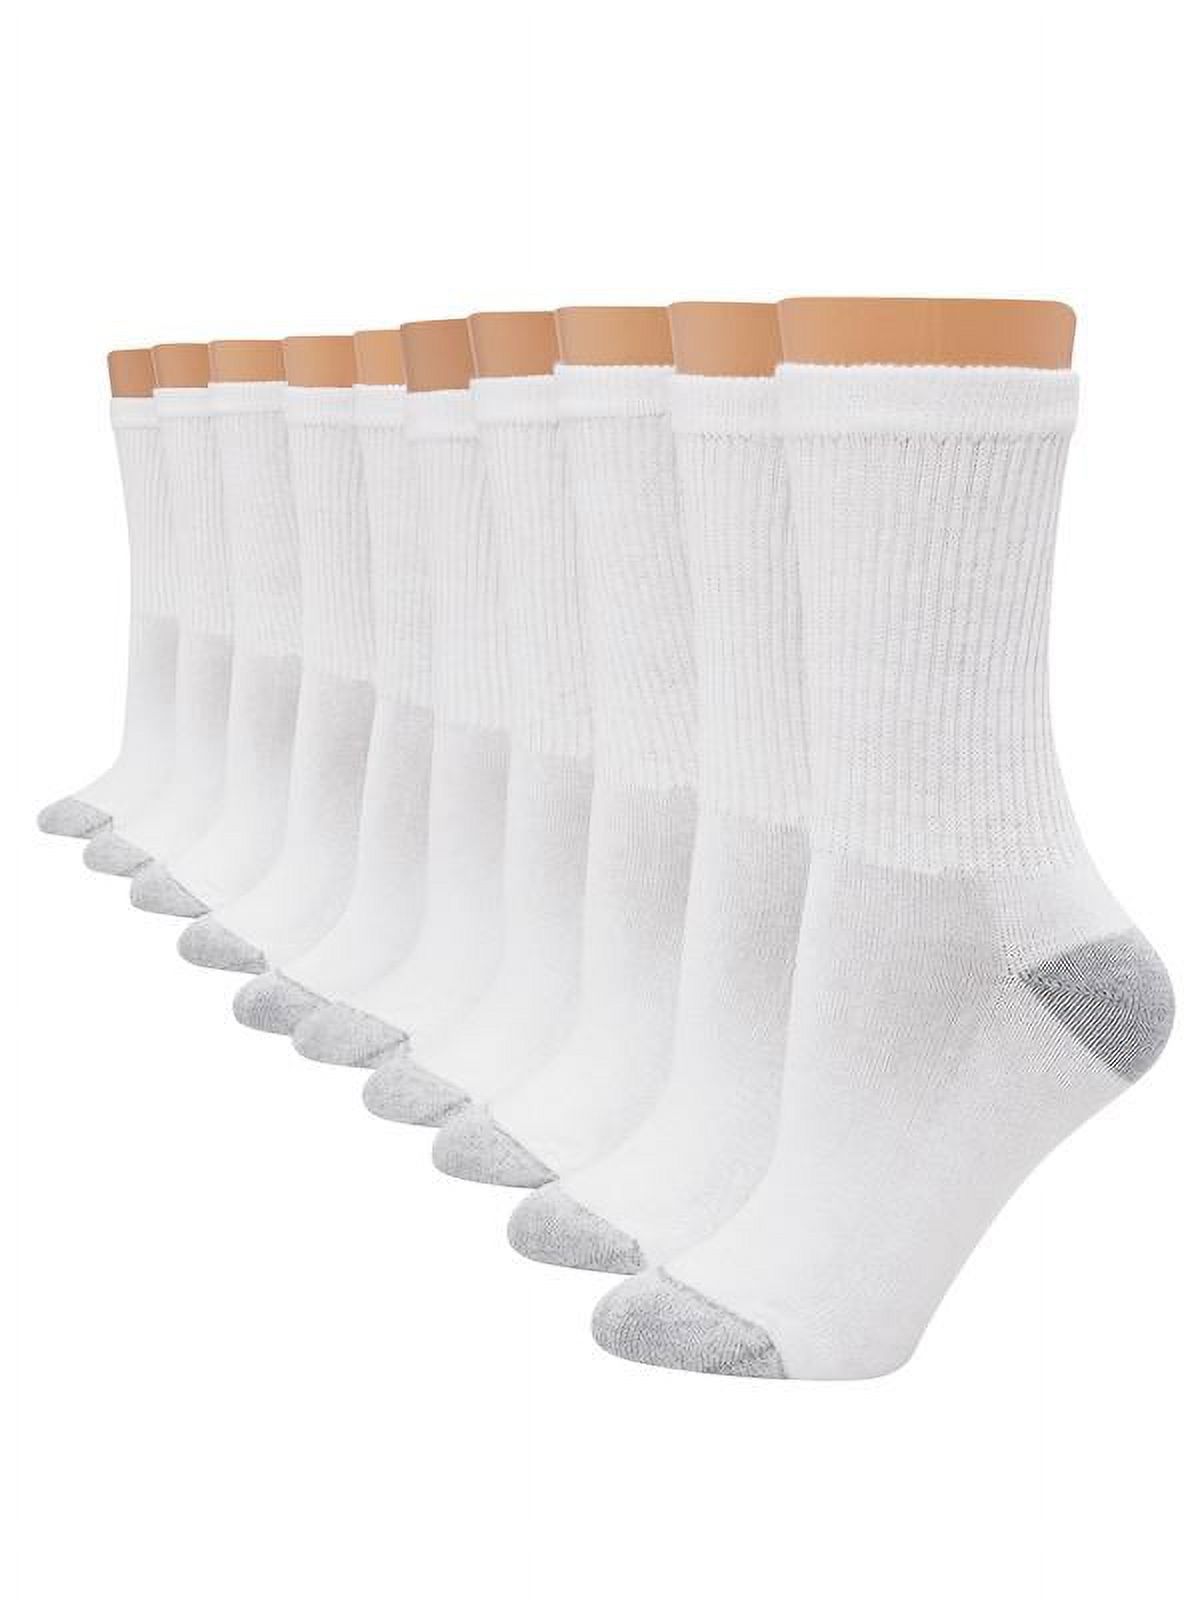 Hanes Women's Cool Comfort Crew Socks, 10-Pair Value Pack - image 3 of 7